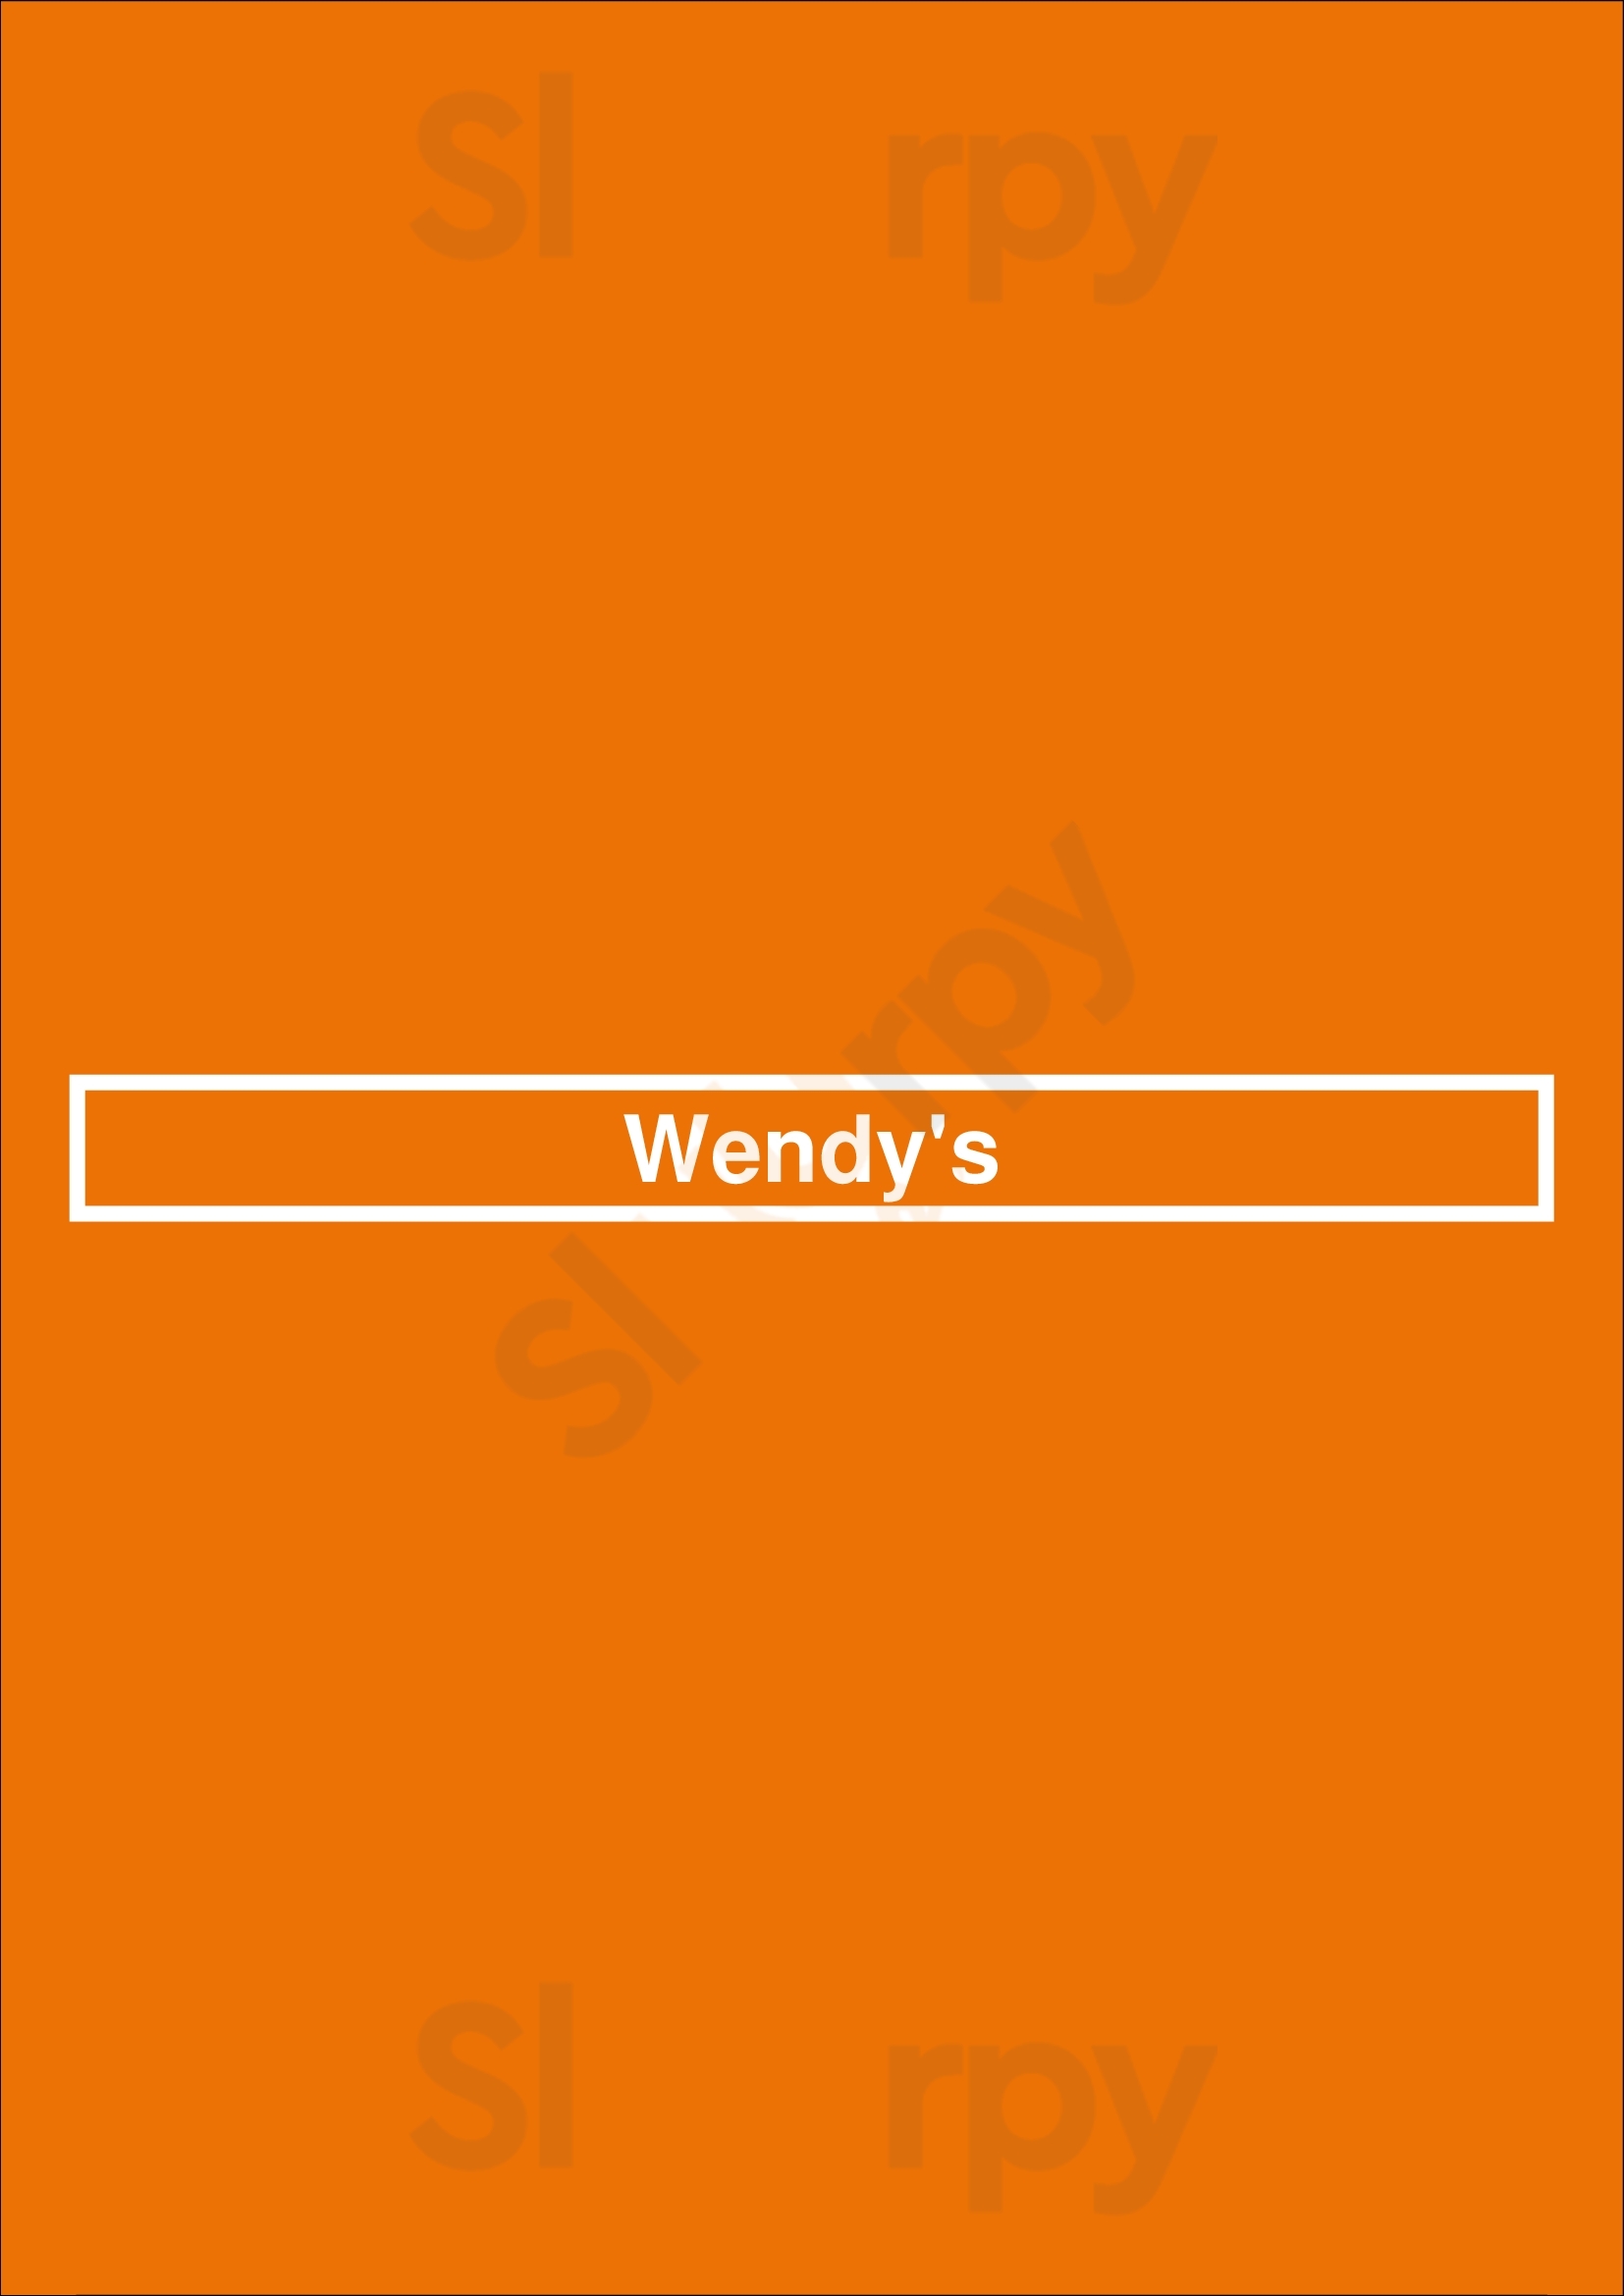 Wendy's Knoxville Menu - 1